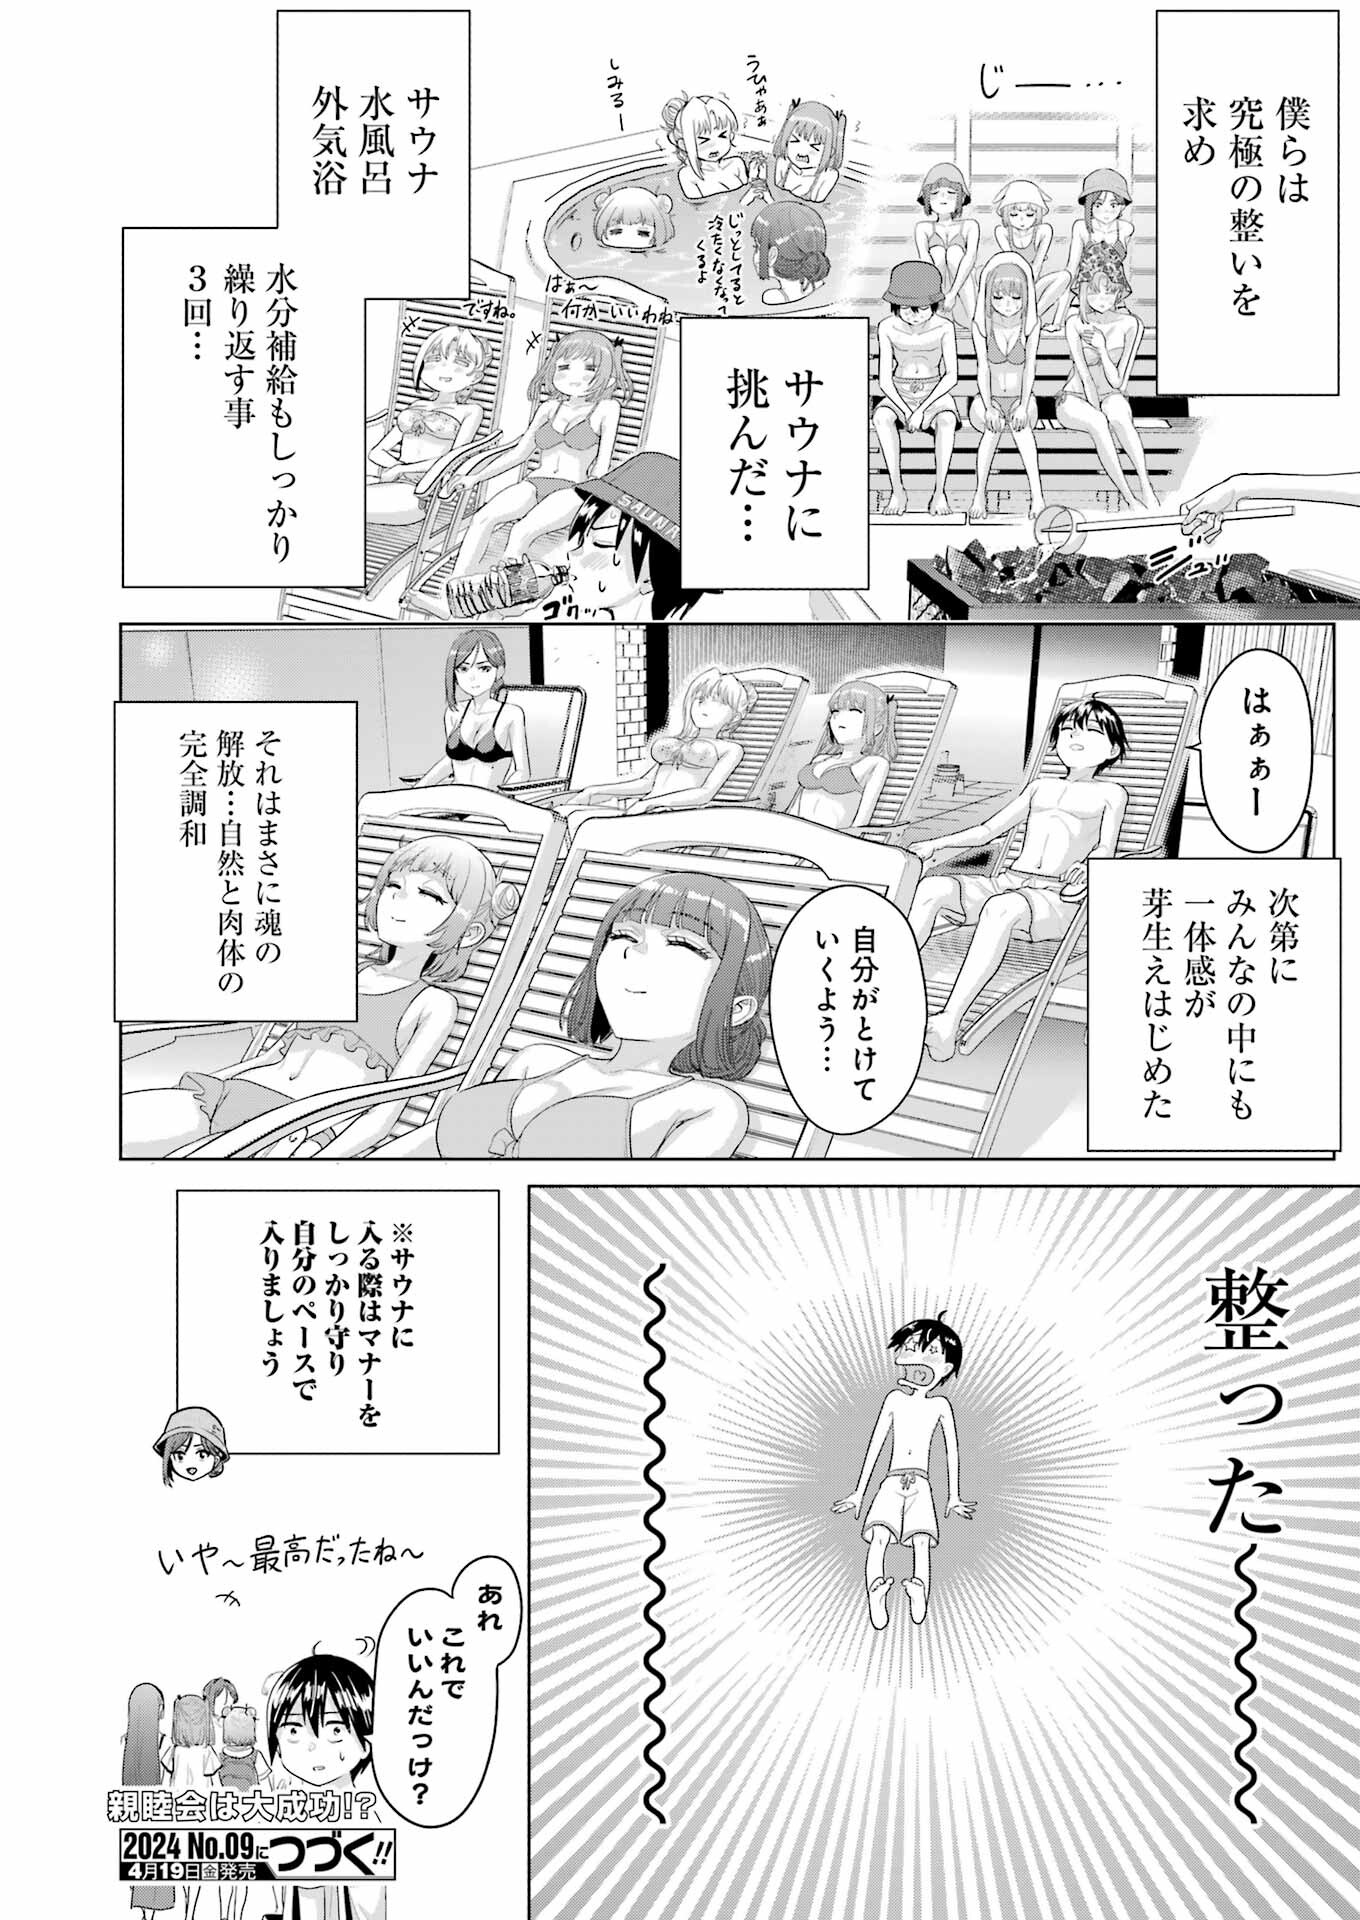 Koukousei Web Sakka no Mote Seikatsu - Chapter 29.5 - Page 24